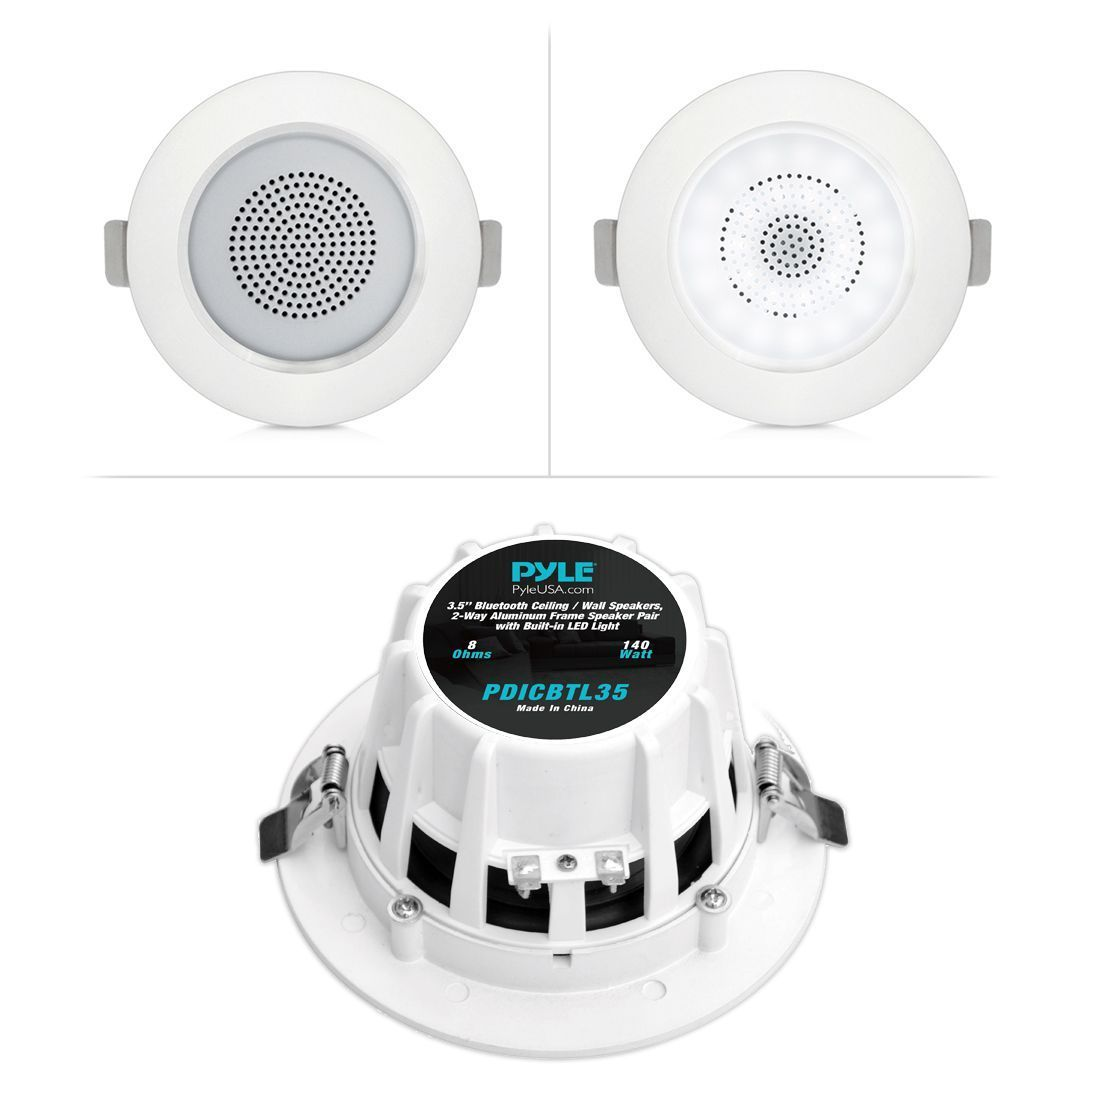 Pyle Pair of 3.5” Bluetooth 2-Way Speaker System, In-wall/Ceiling, 650 Lumen LED Lights, (PDICBTL35)